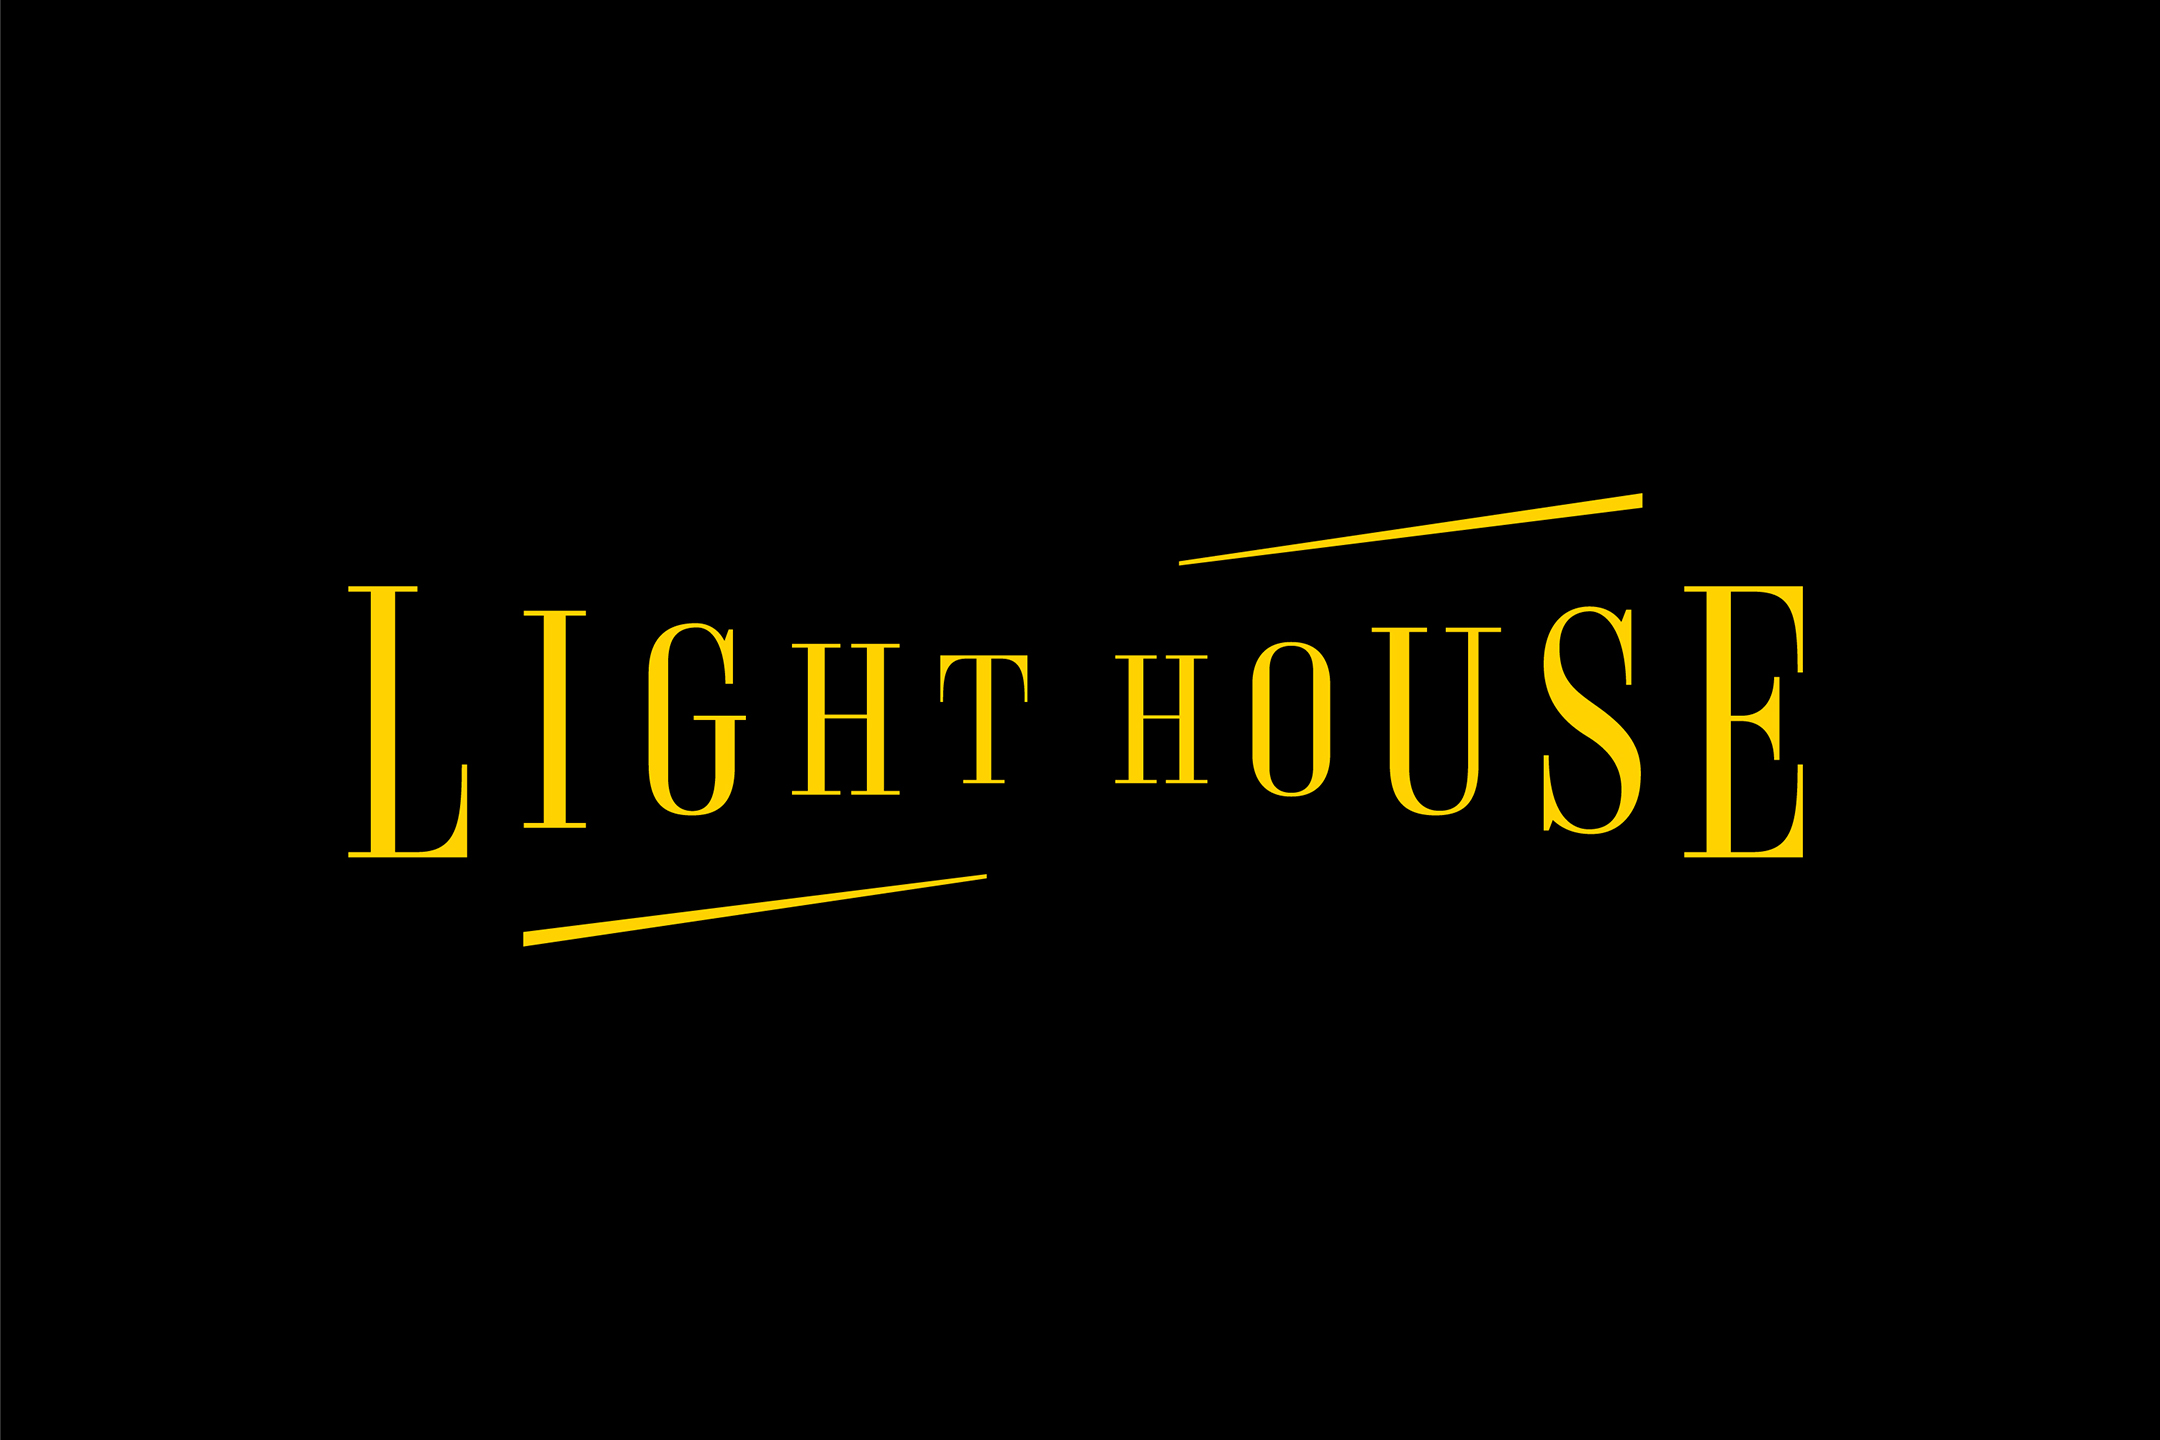 LIGHTHOUSE1